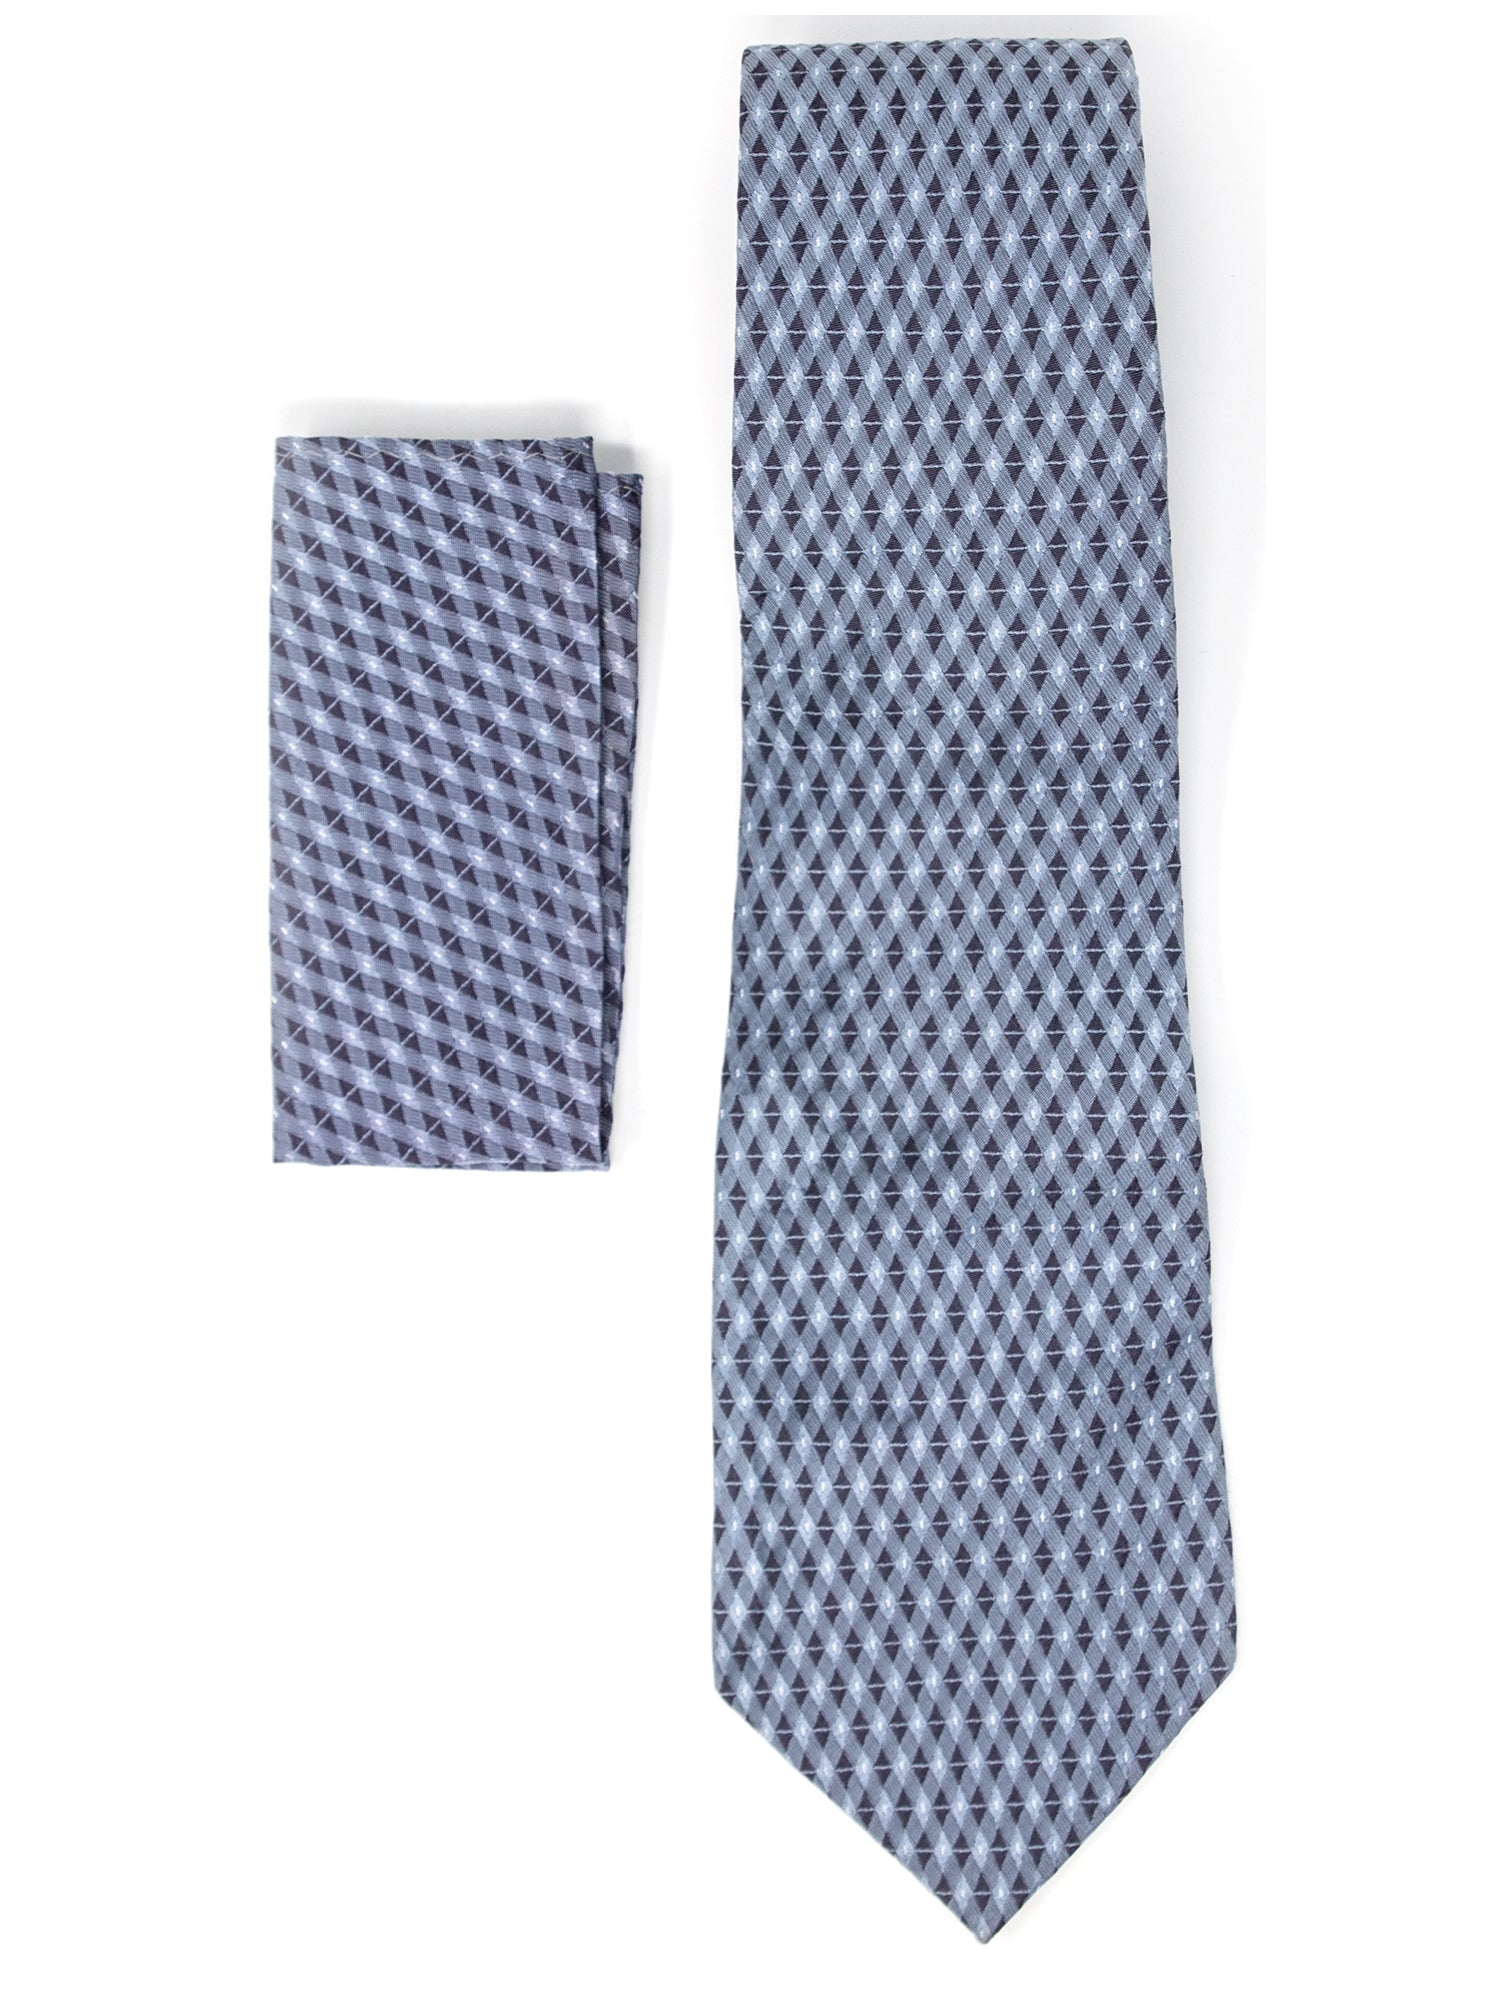 Men's Silk Woven Wedding Neck Tie With Handkerchief Neck Tie TheDapperTie Grey And Black Checks Regular 